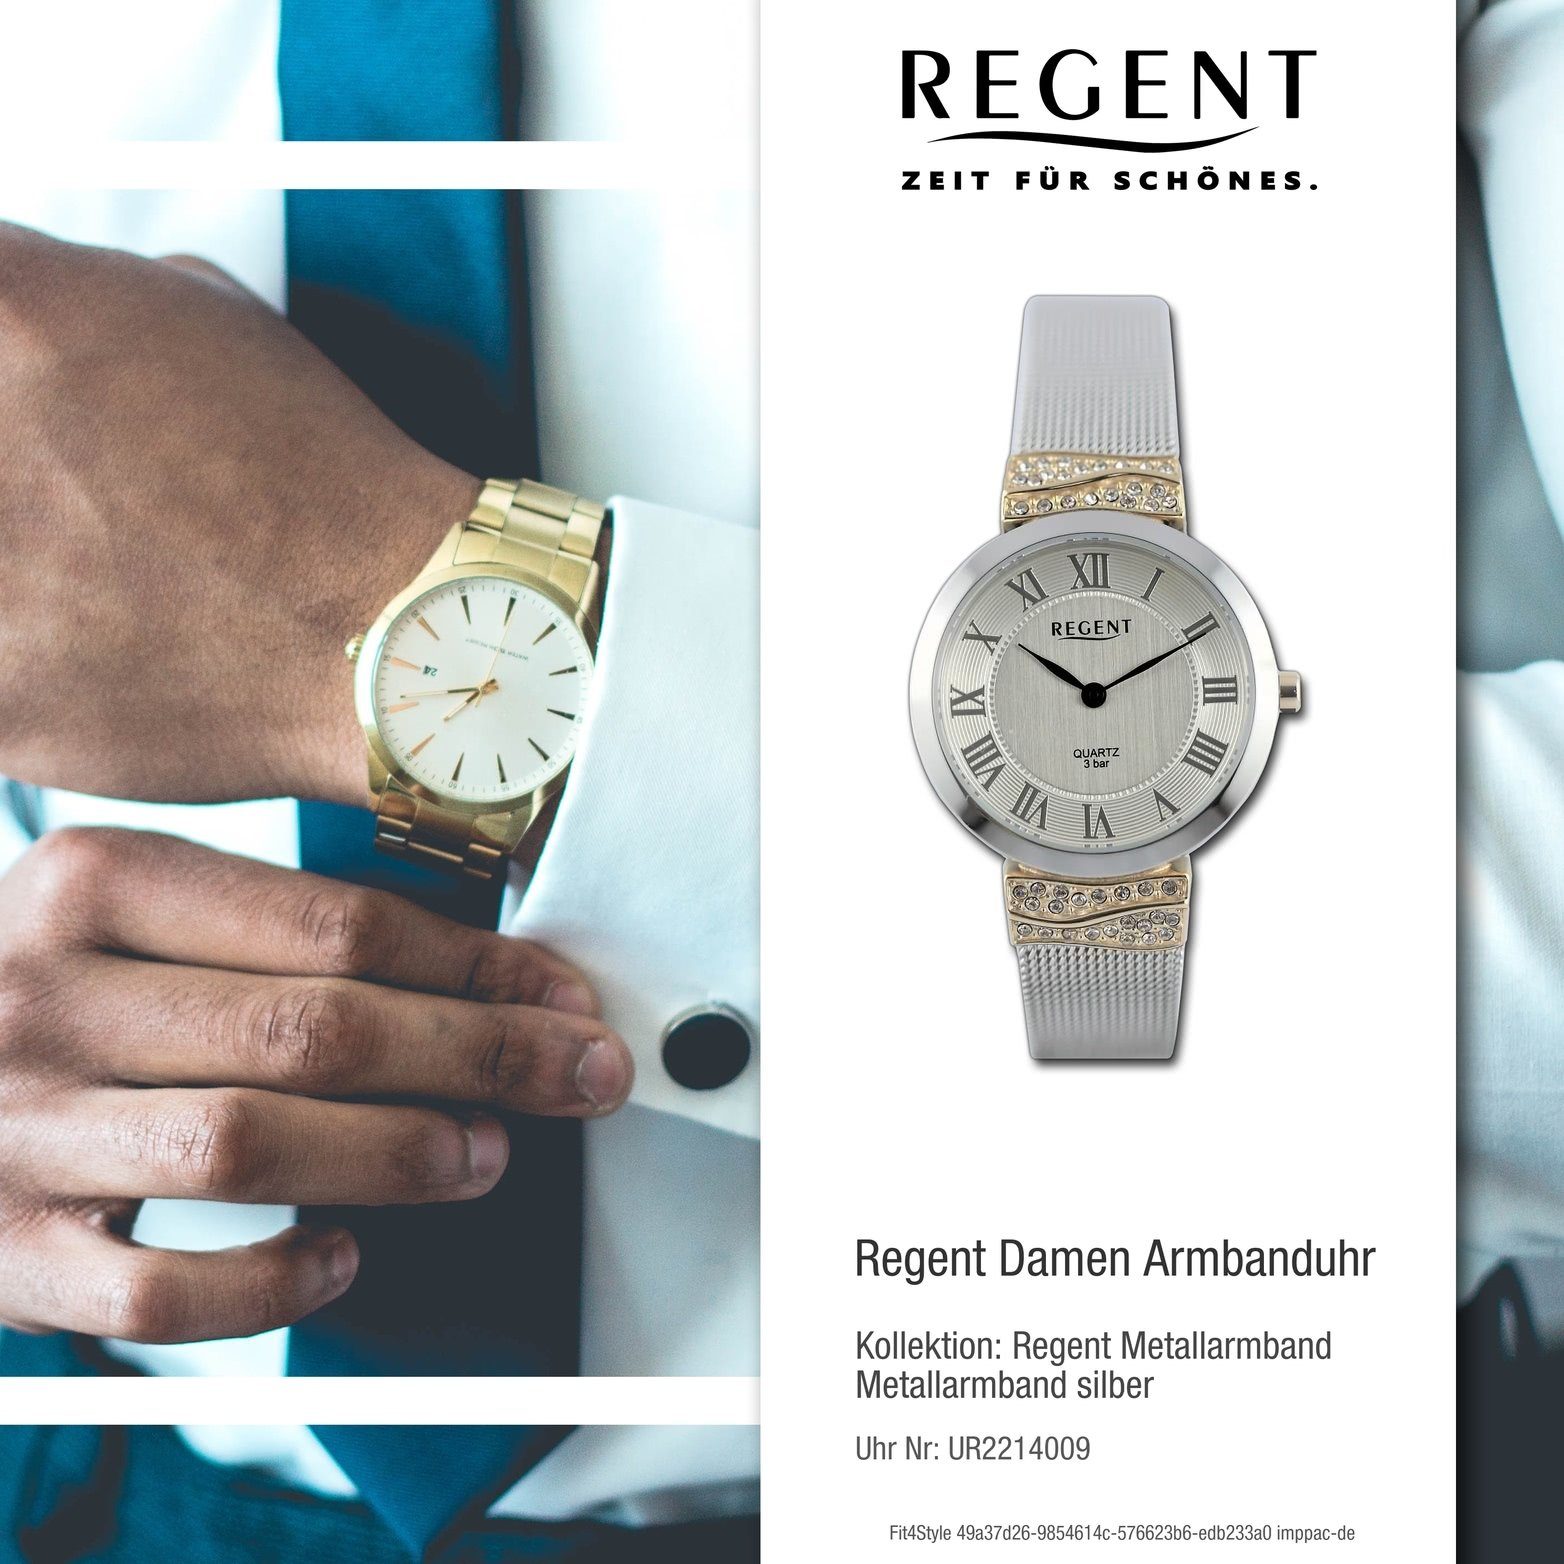 Metallarmband Regent groß Armbanduhr gold, silber, (ca. rundes Gehäuse, Analog, Damen 30mm) Damenuhr Regent Quarzuhr